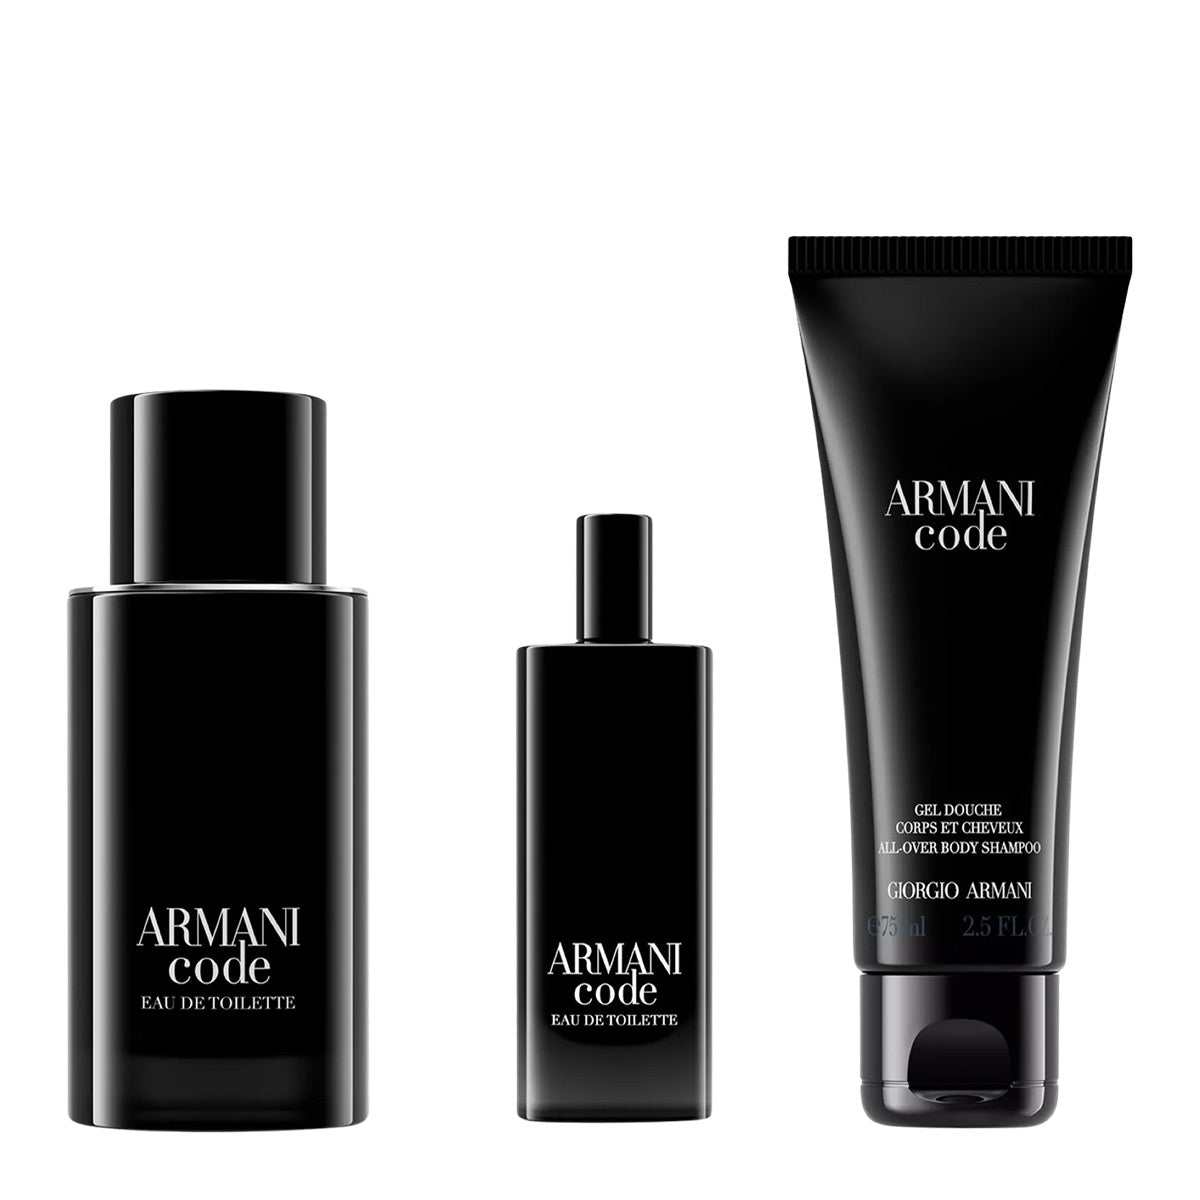 Girogio Armani Men's Armani Code Eau de Toilette Gift Set